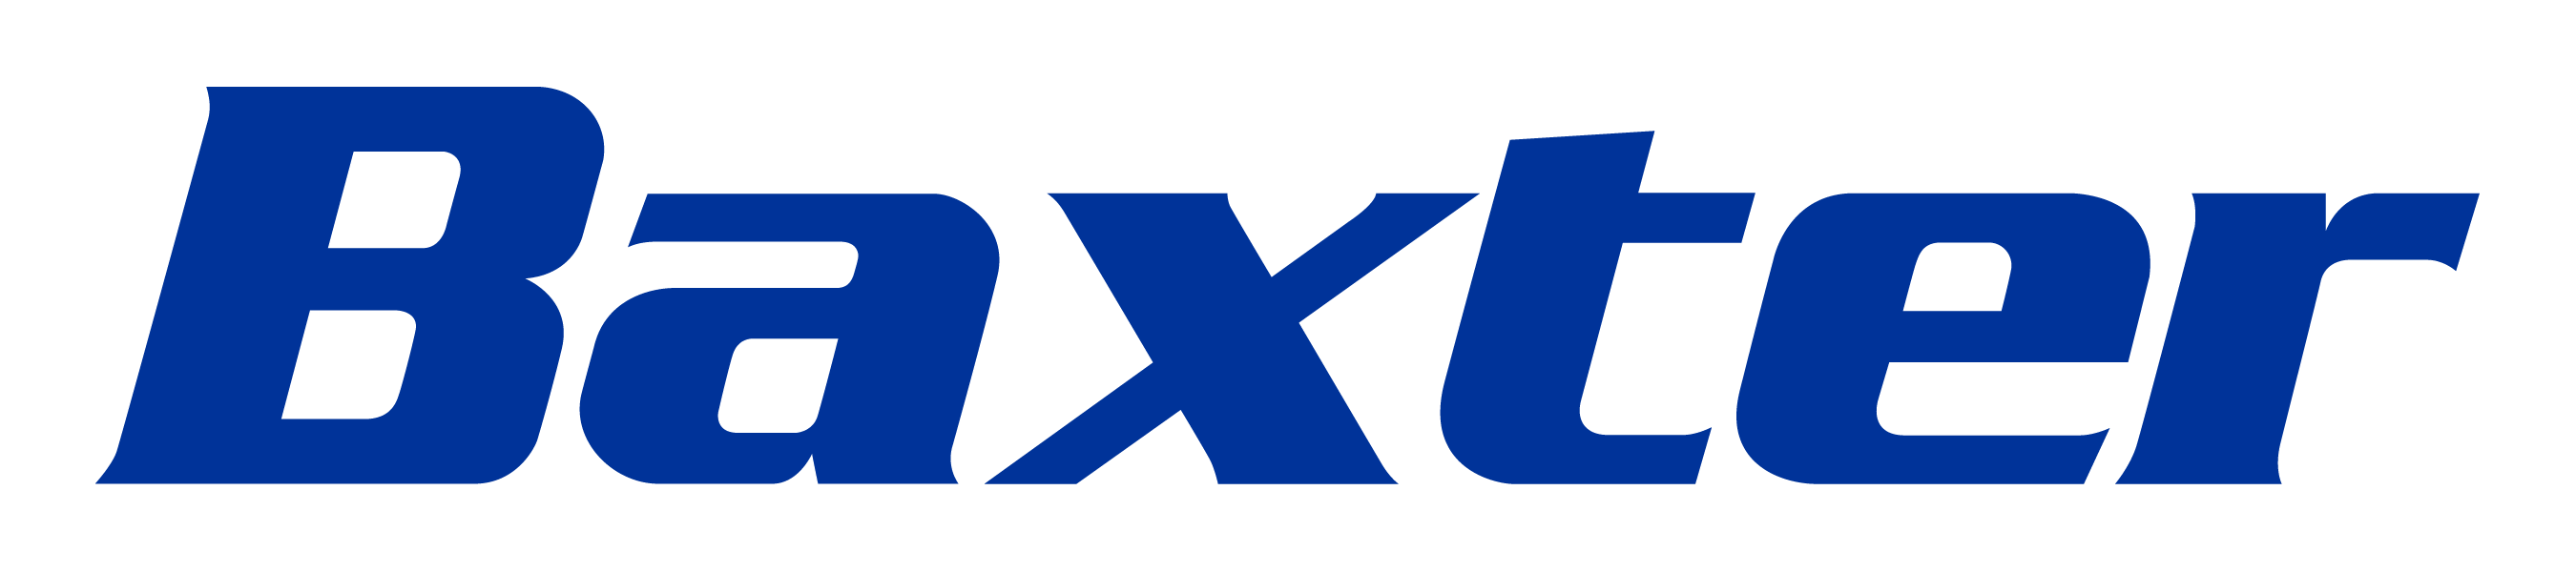 Baxter Logo PNG Transparent